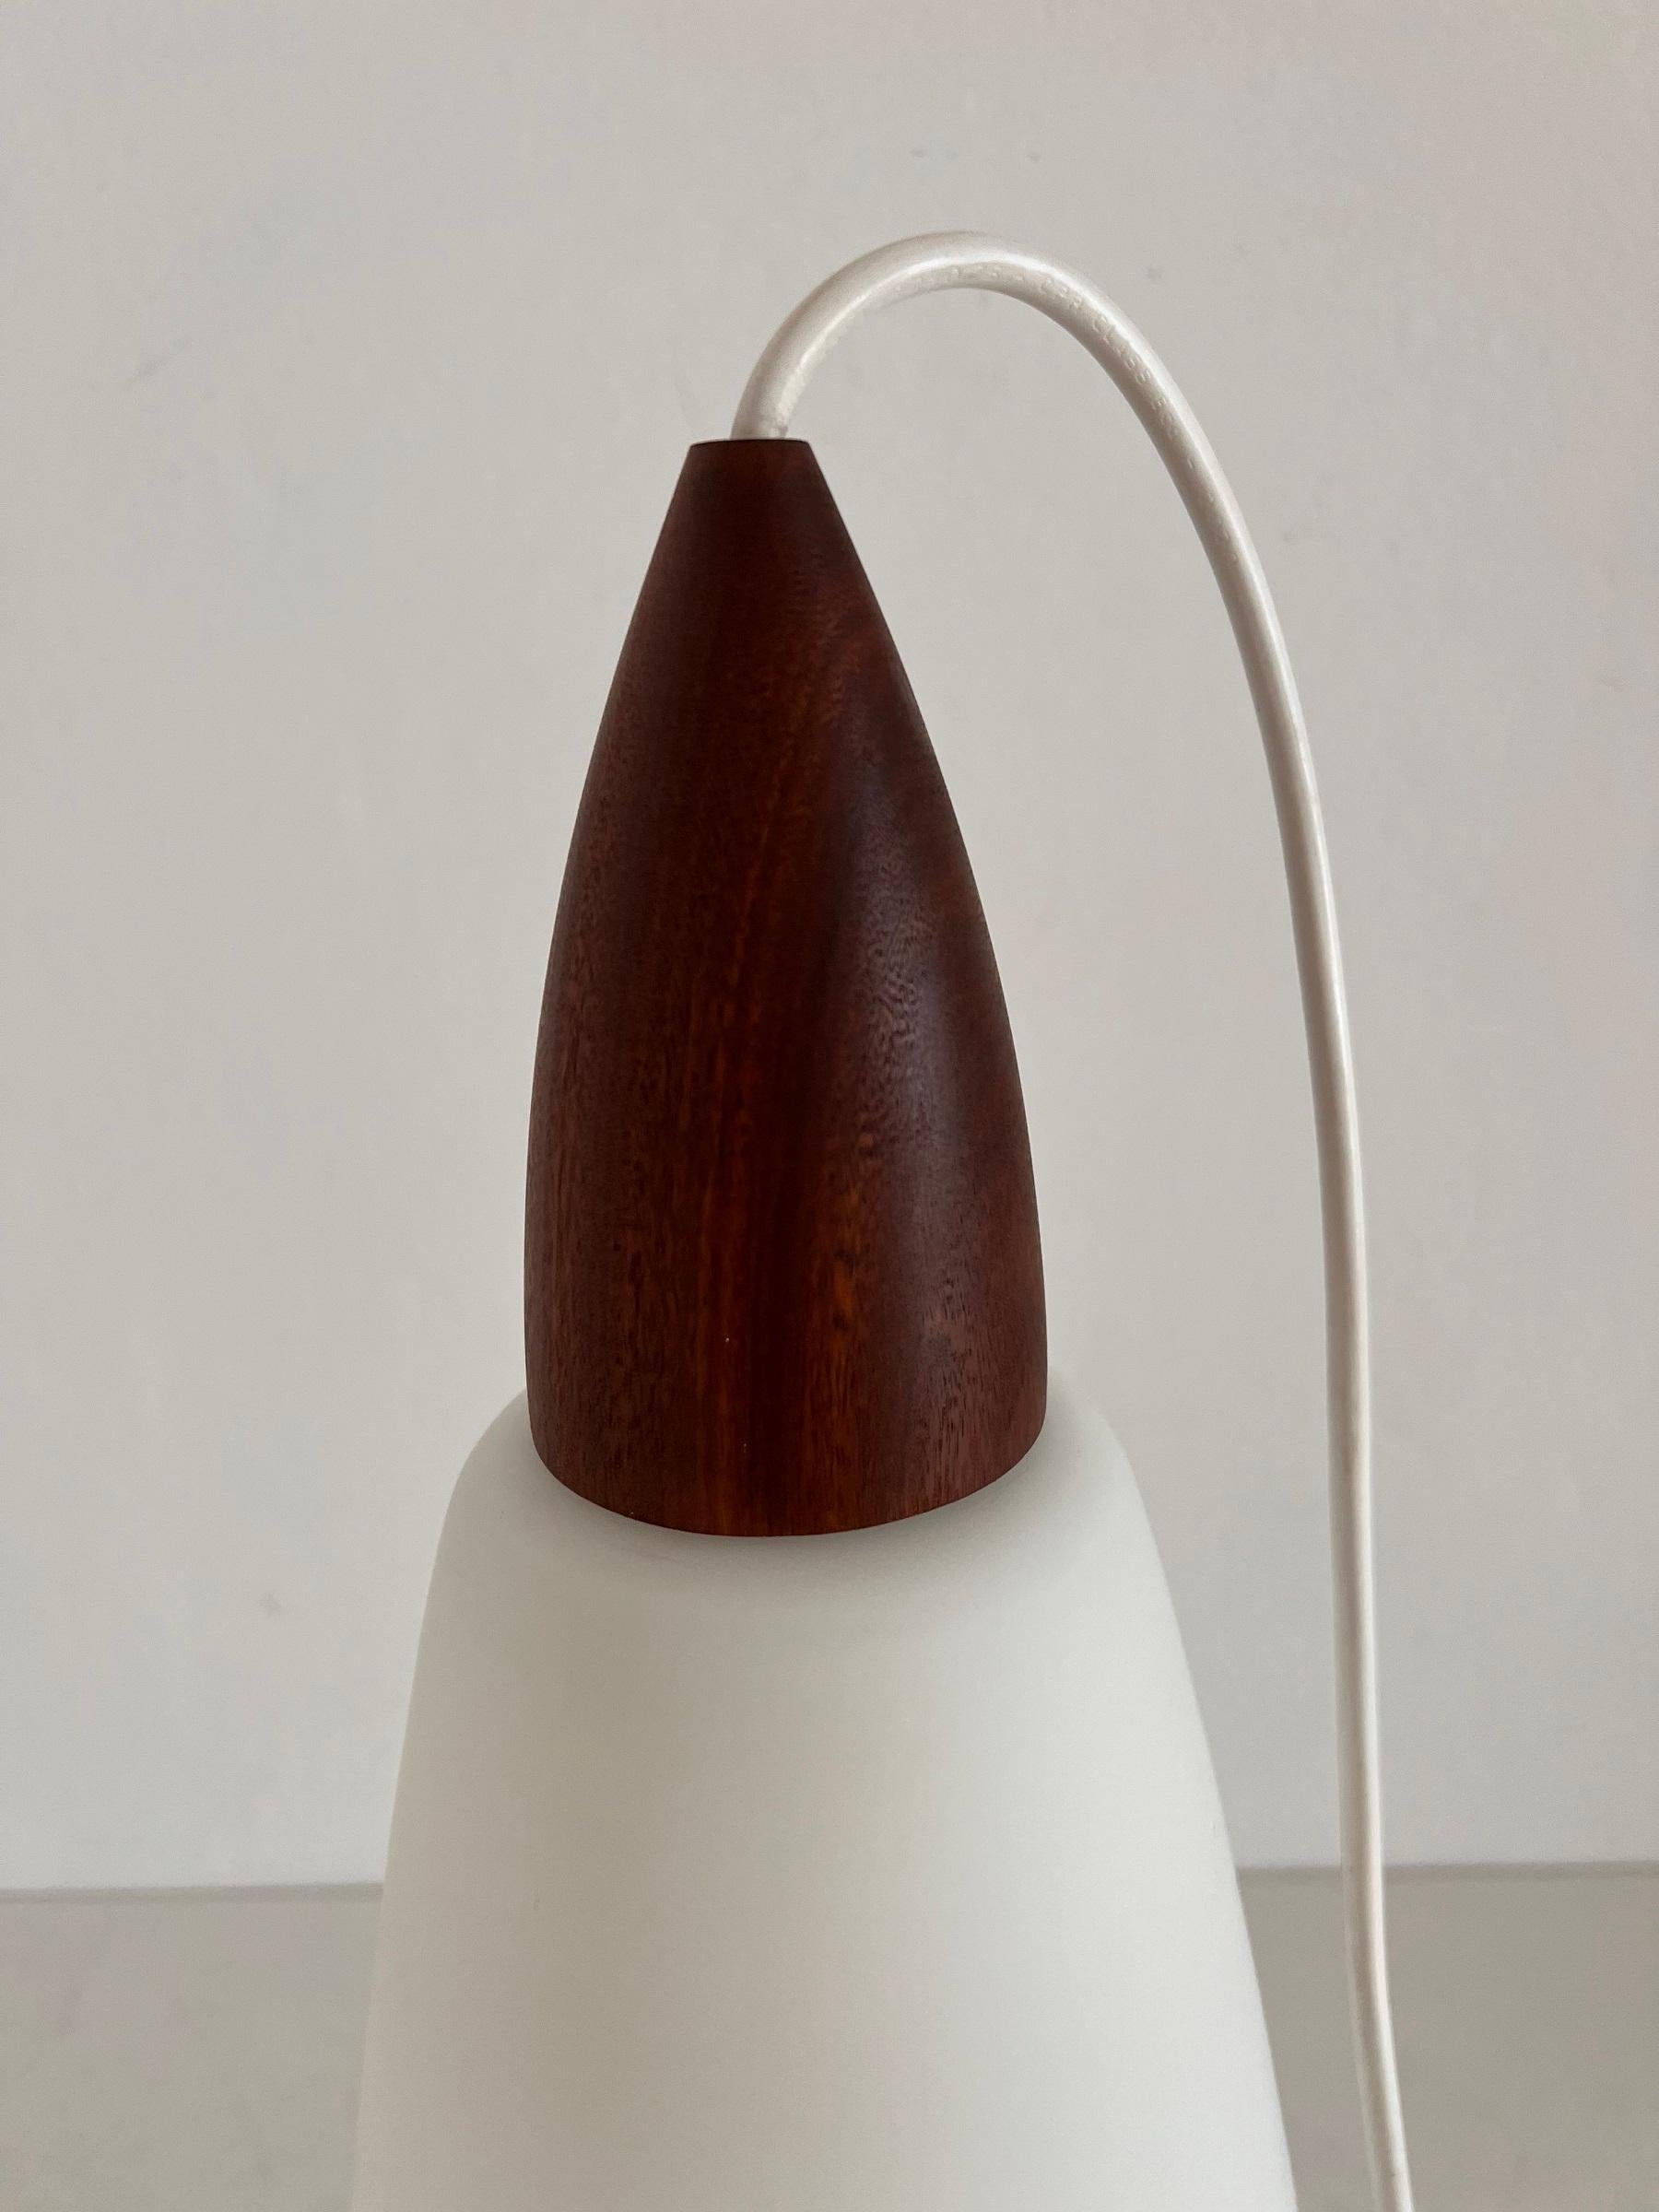 Italian Midcentury Nordic Style Pendant in Teak and Milk Glass, 1960s For Sale 4